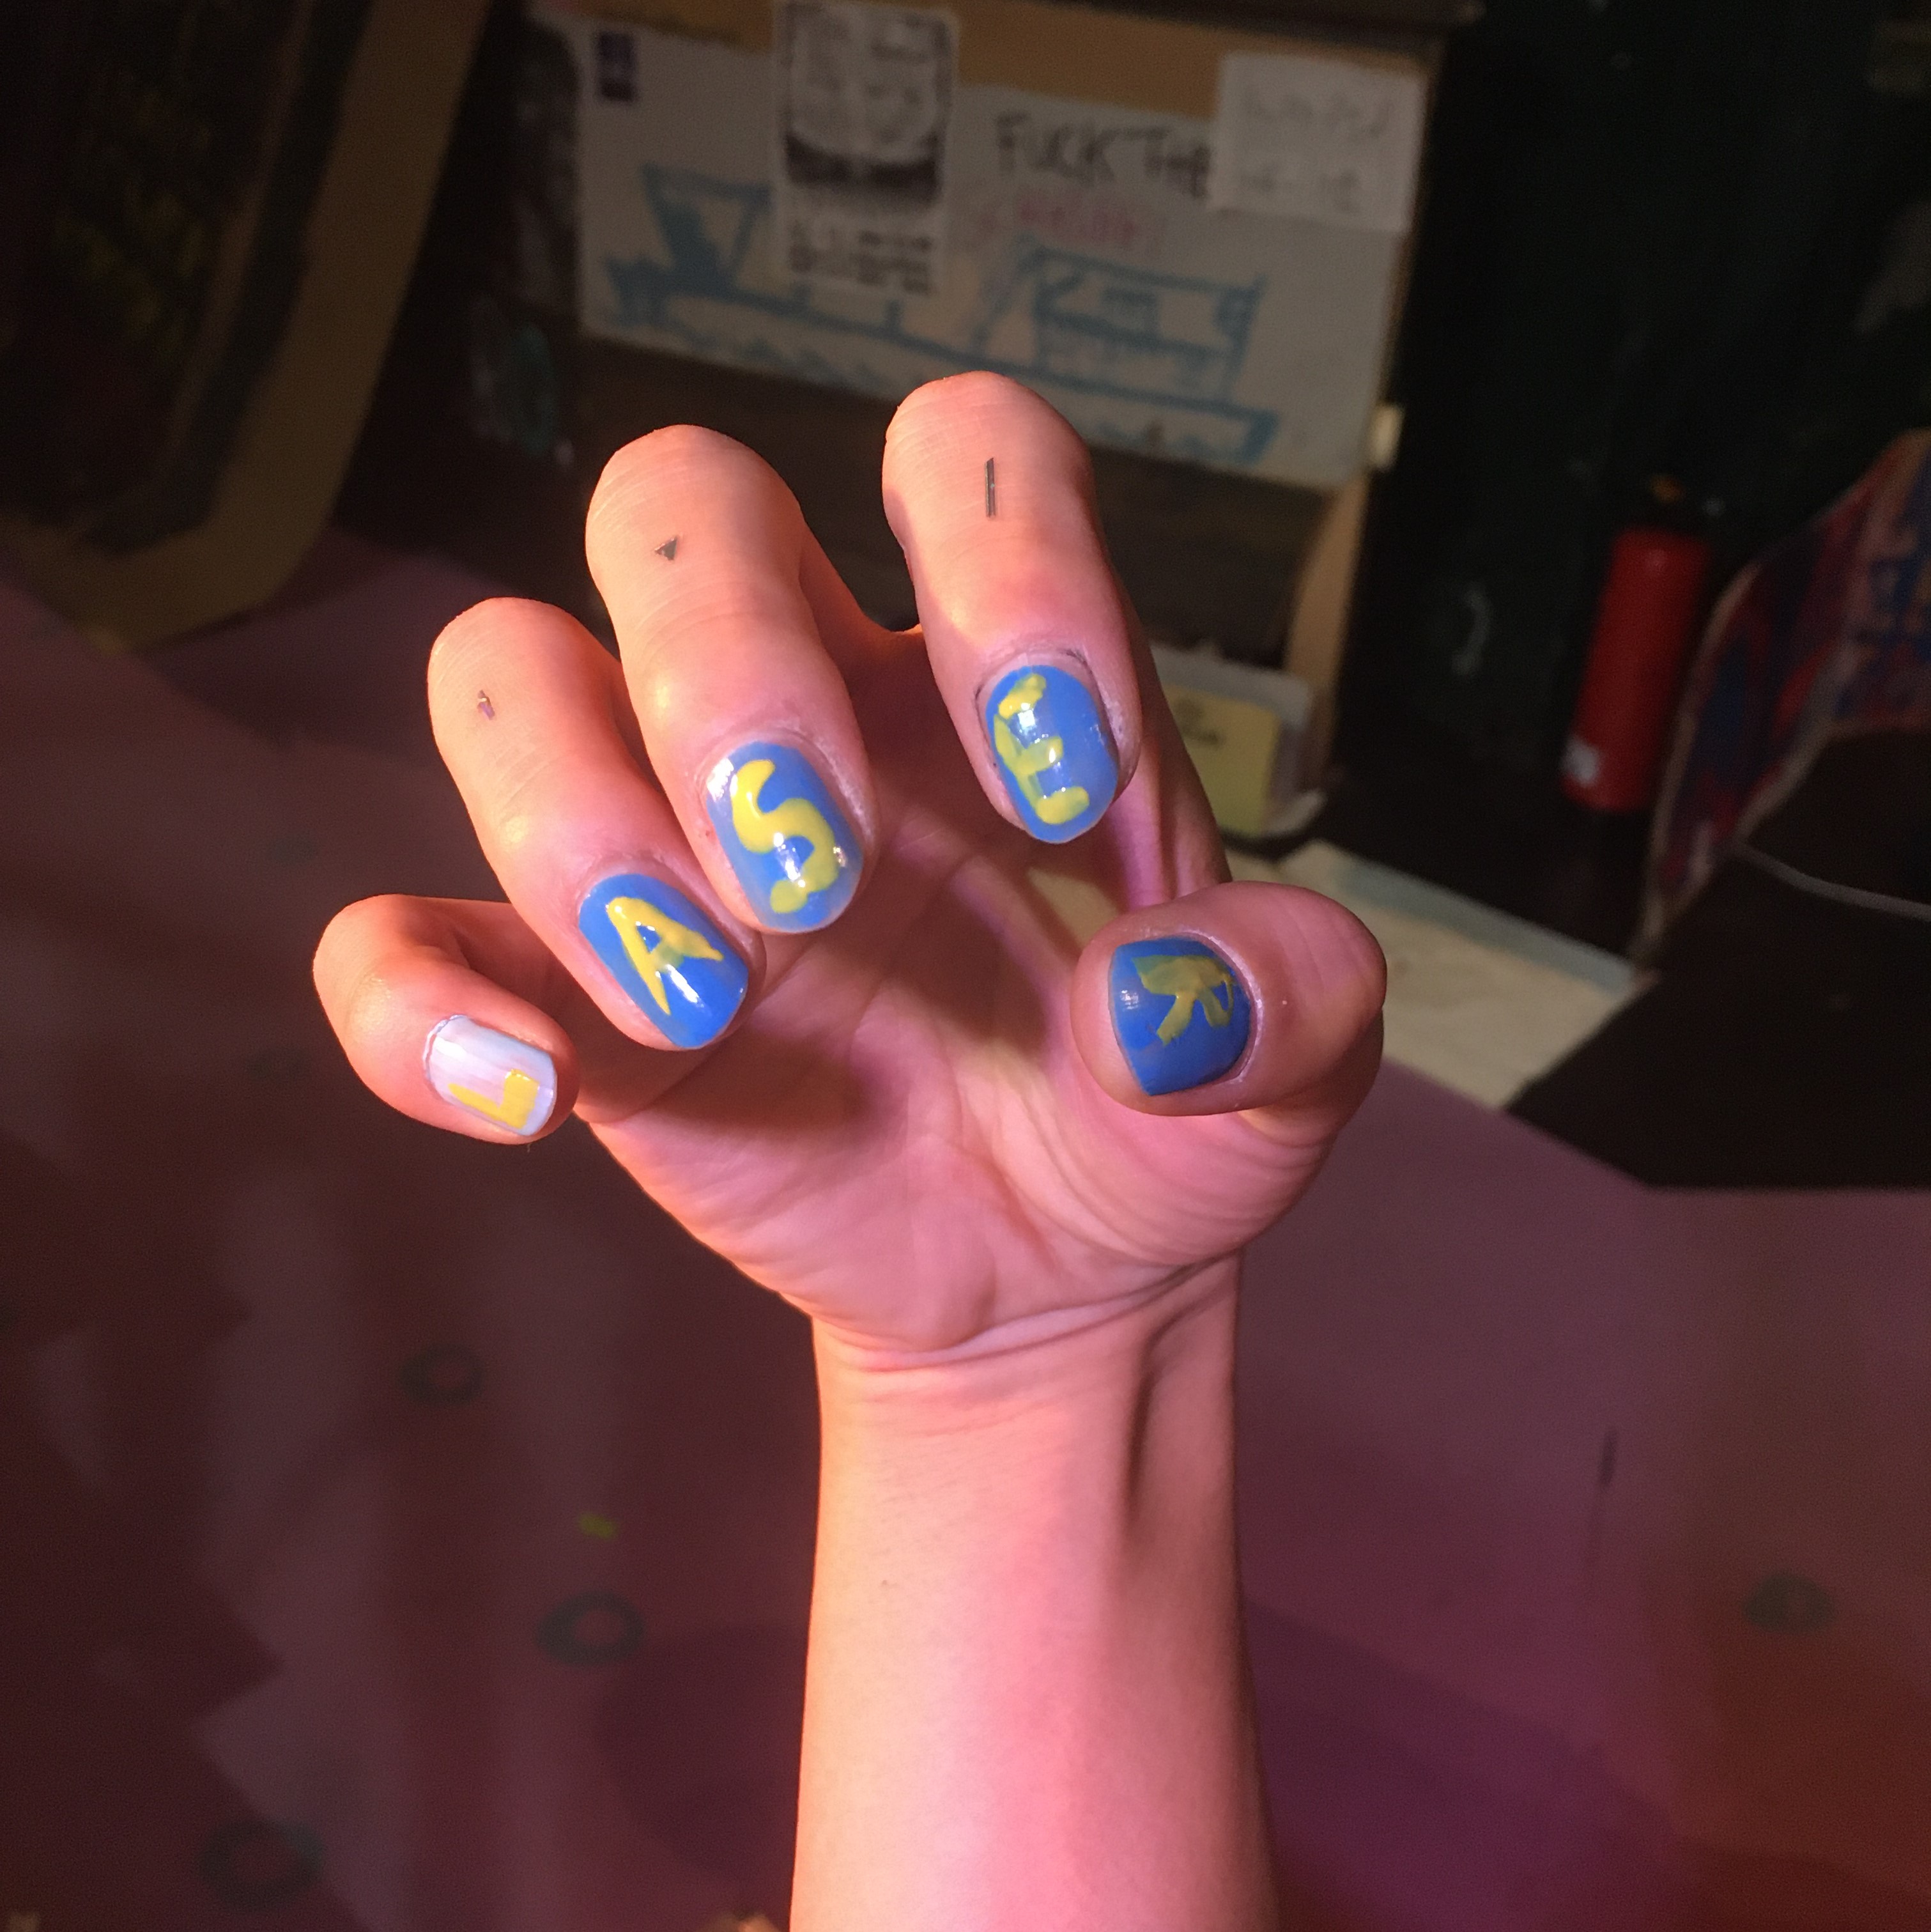 My nails written as LASER